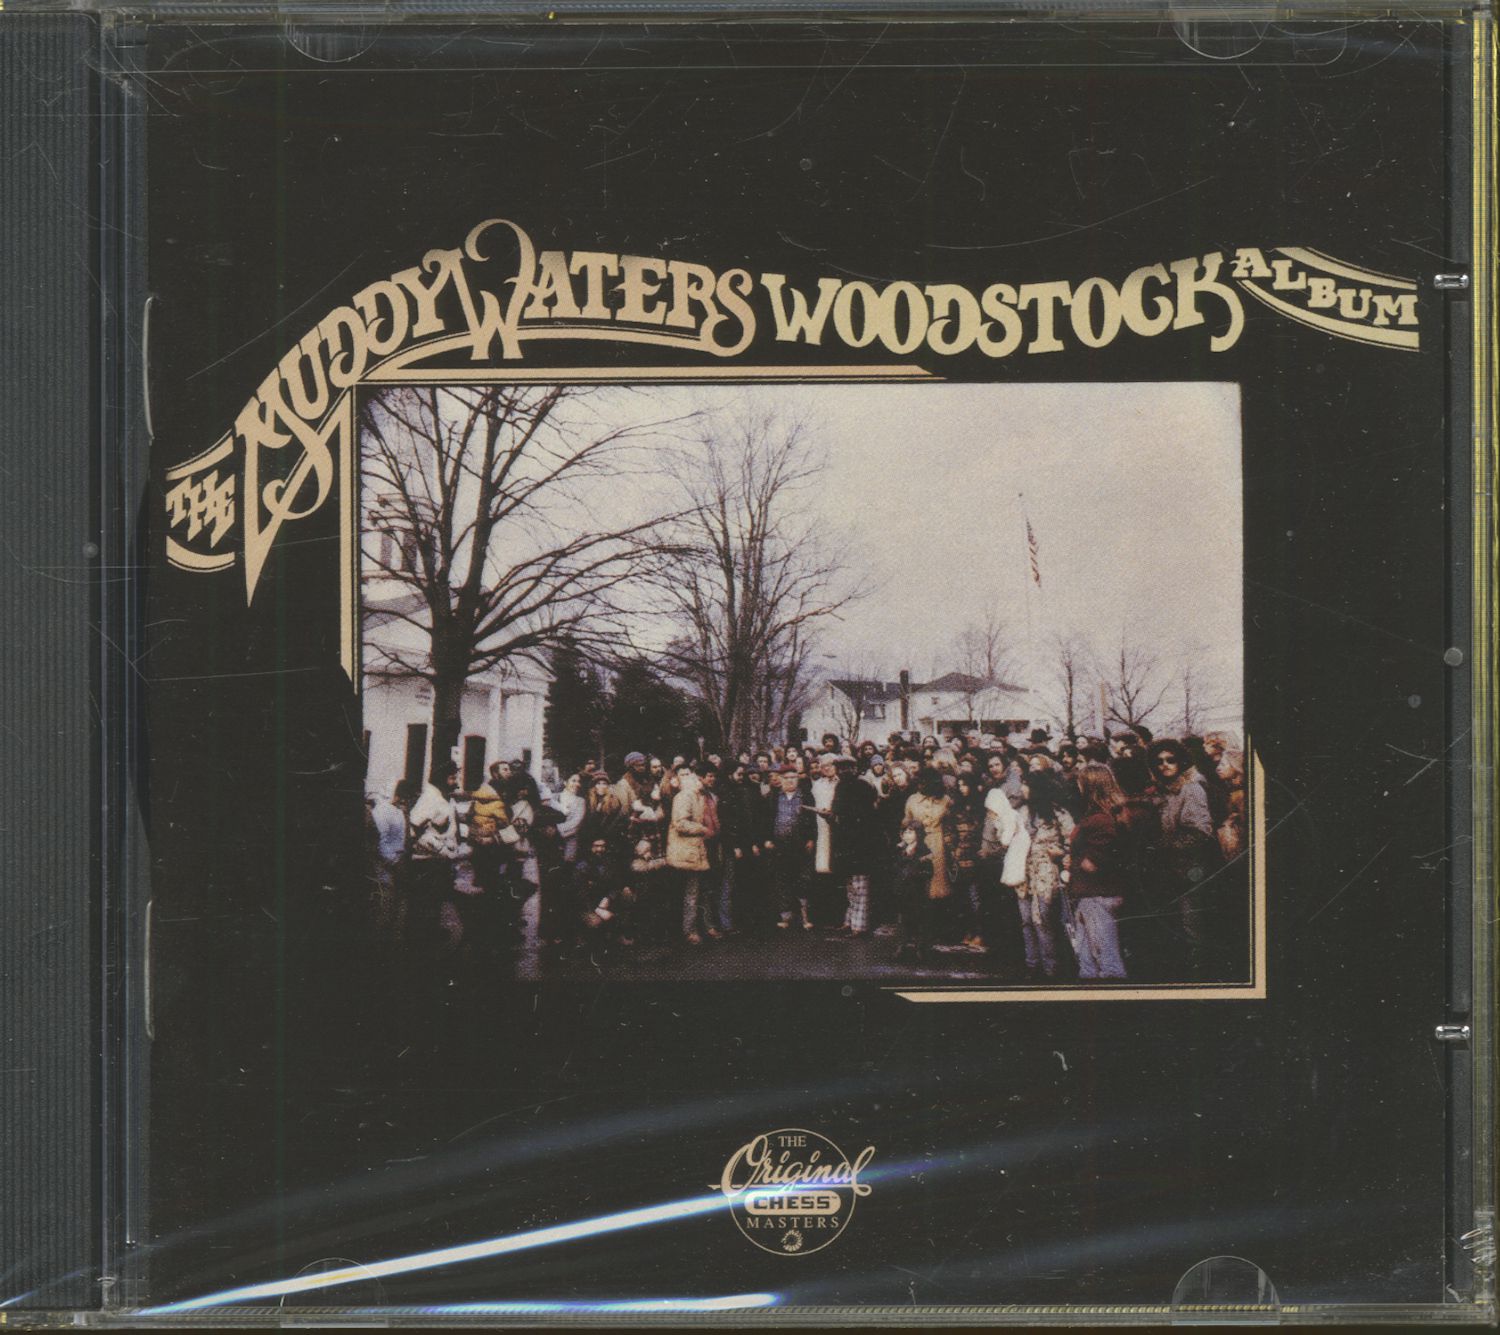 Muddy Waters CD: The Muddy Waters Woodstock Album (CD) - Bear Family ...